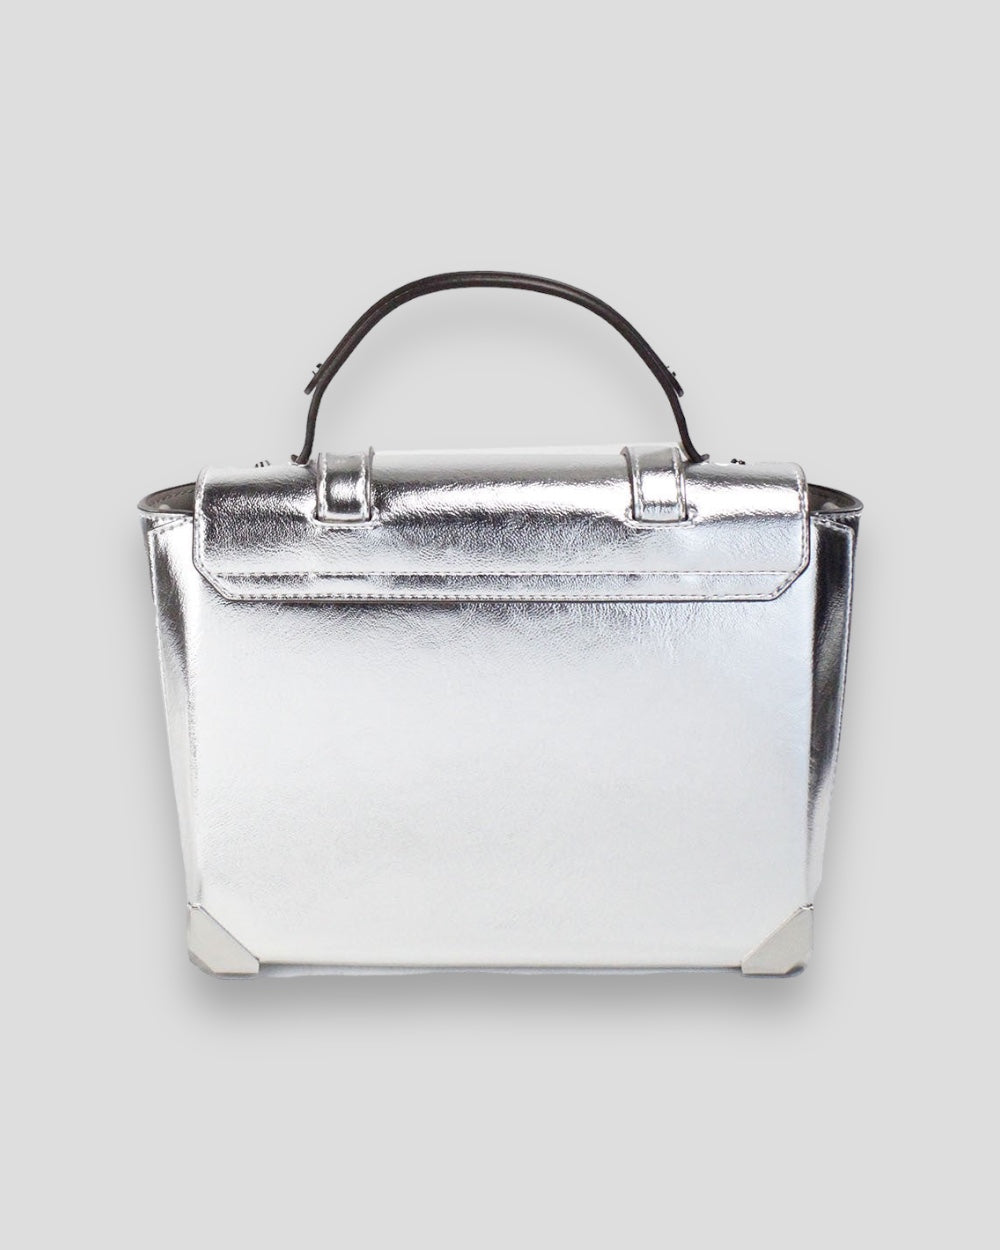 Michael Kors Manhattan Medium Silver Leather Top Handle Satchel Bag